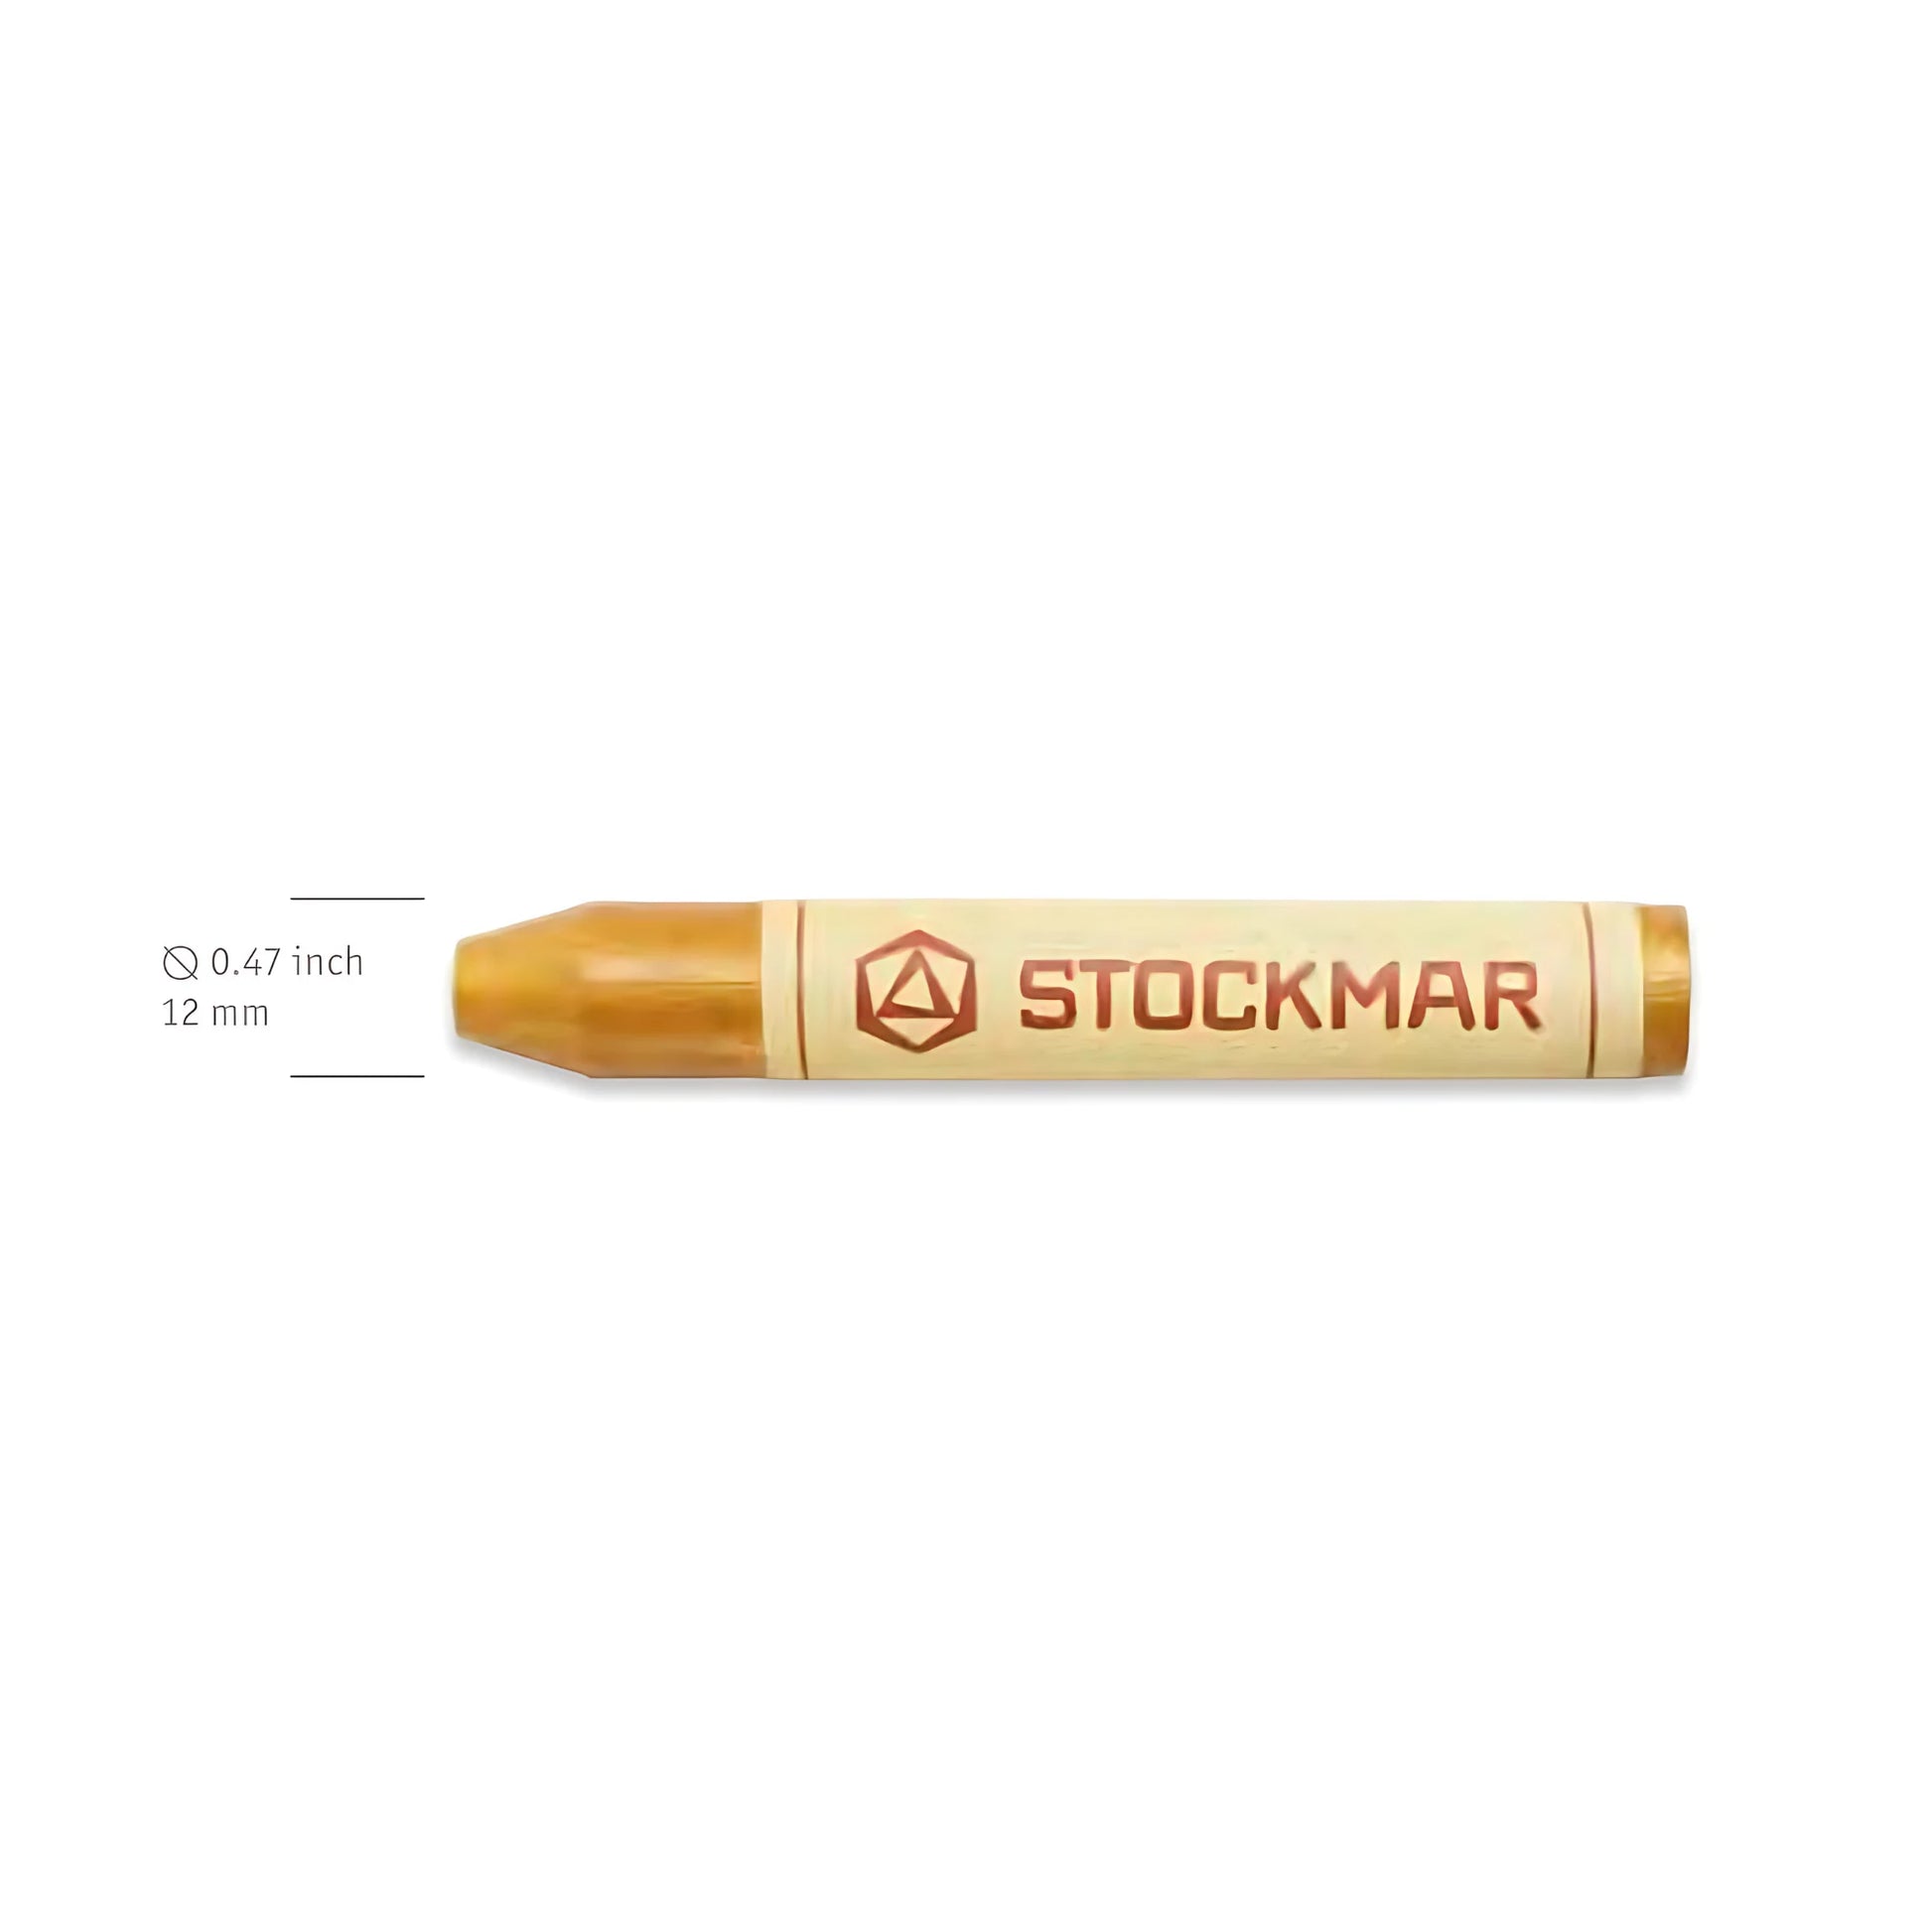 Stockmar Rainbow Crayons, Limited Edition - Alder & Alouette